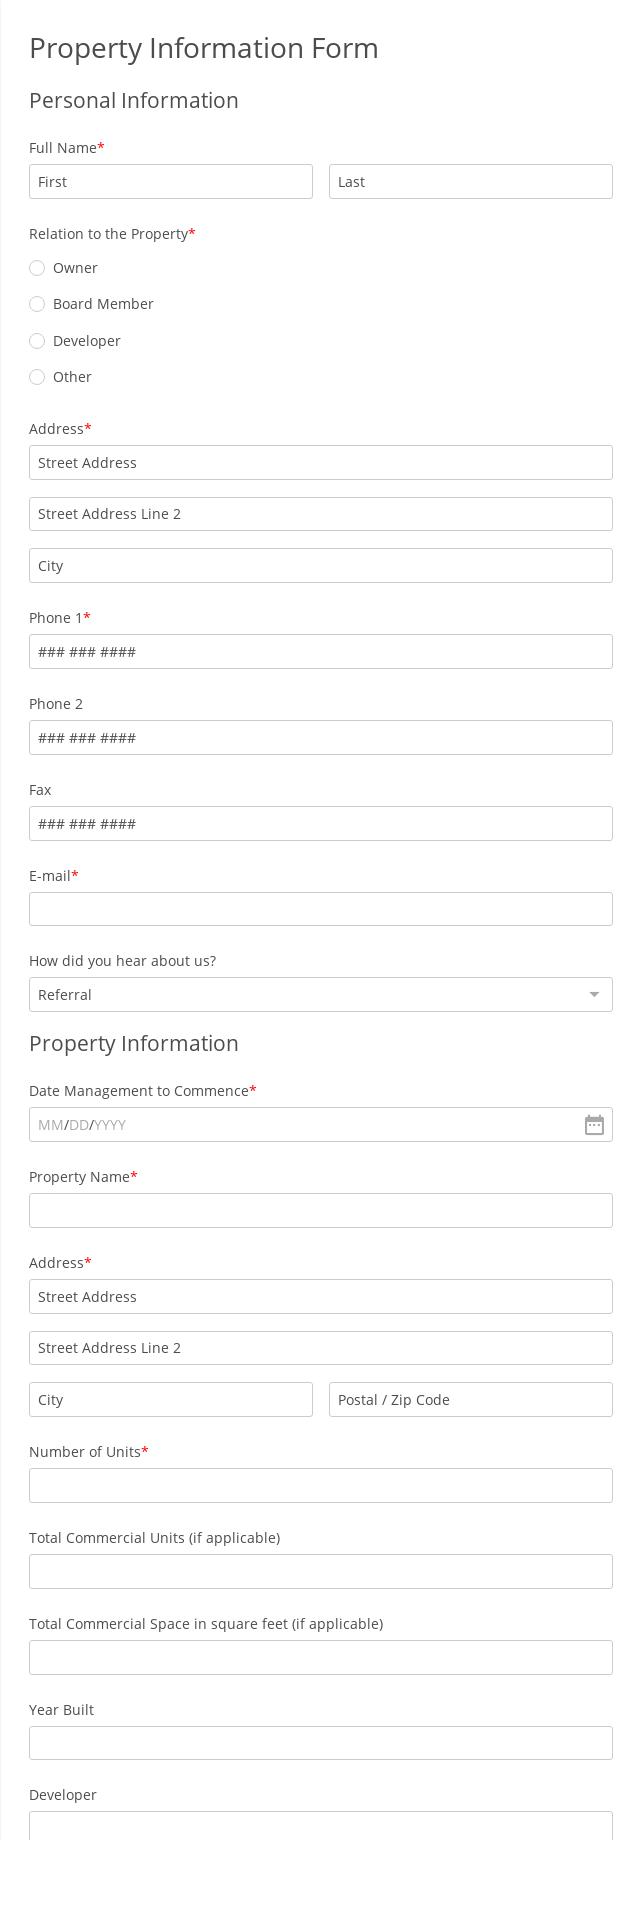 Property Information Form